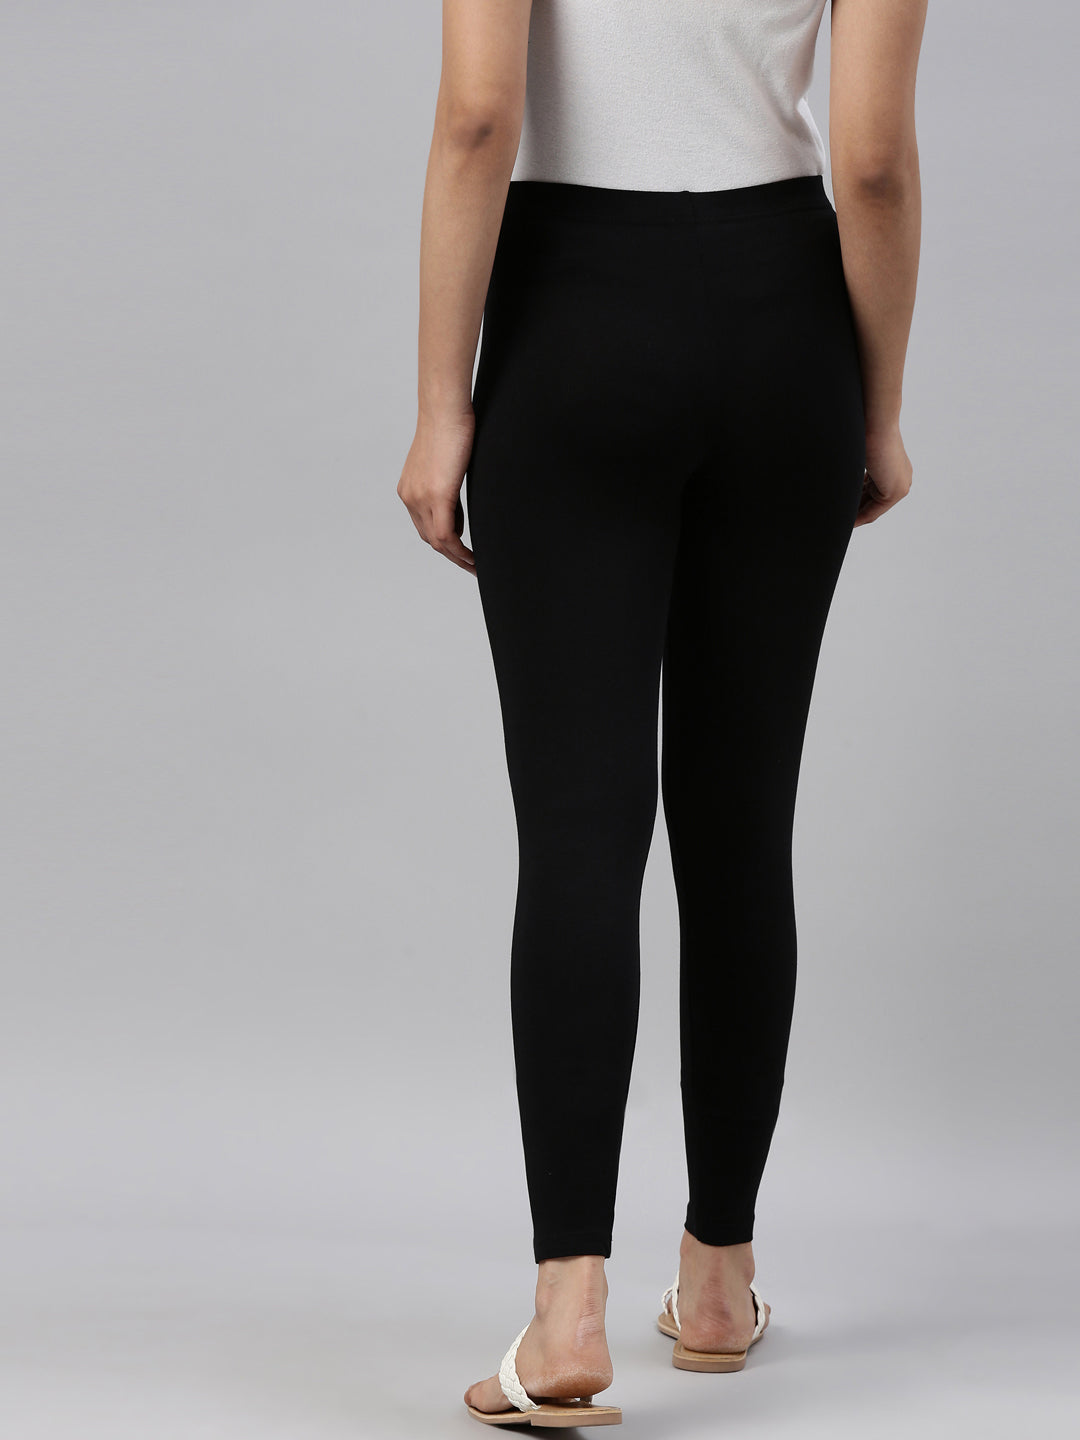 Buy Trend inn Designer Cotton Lycra Black Colour Legging/Women Legging  (X-Large) at Amazon.in